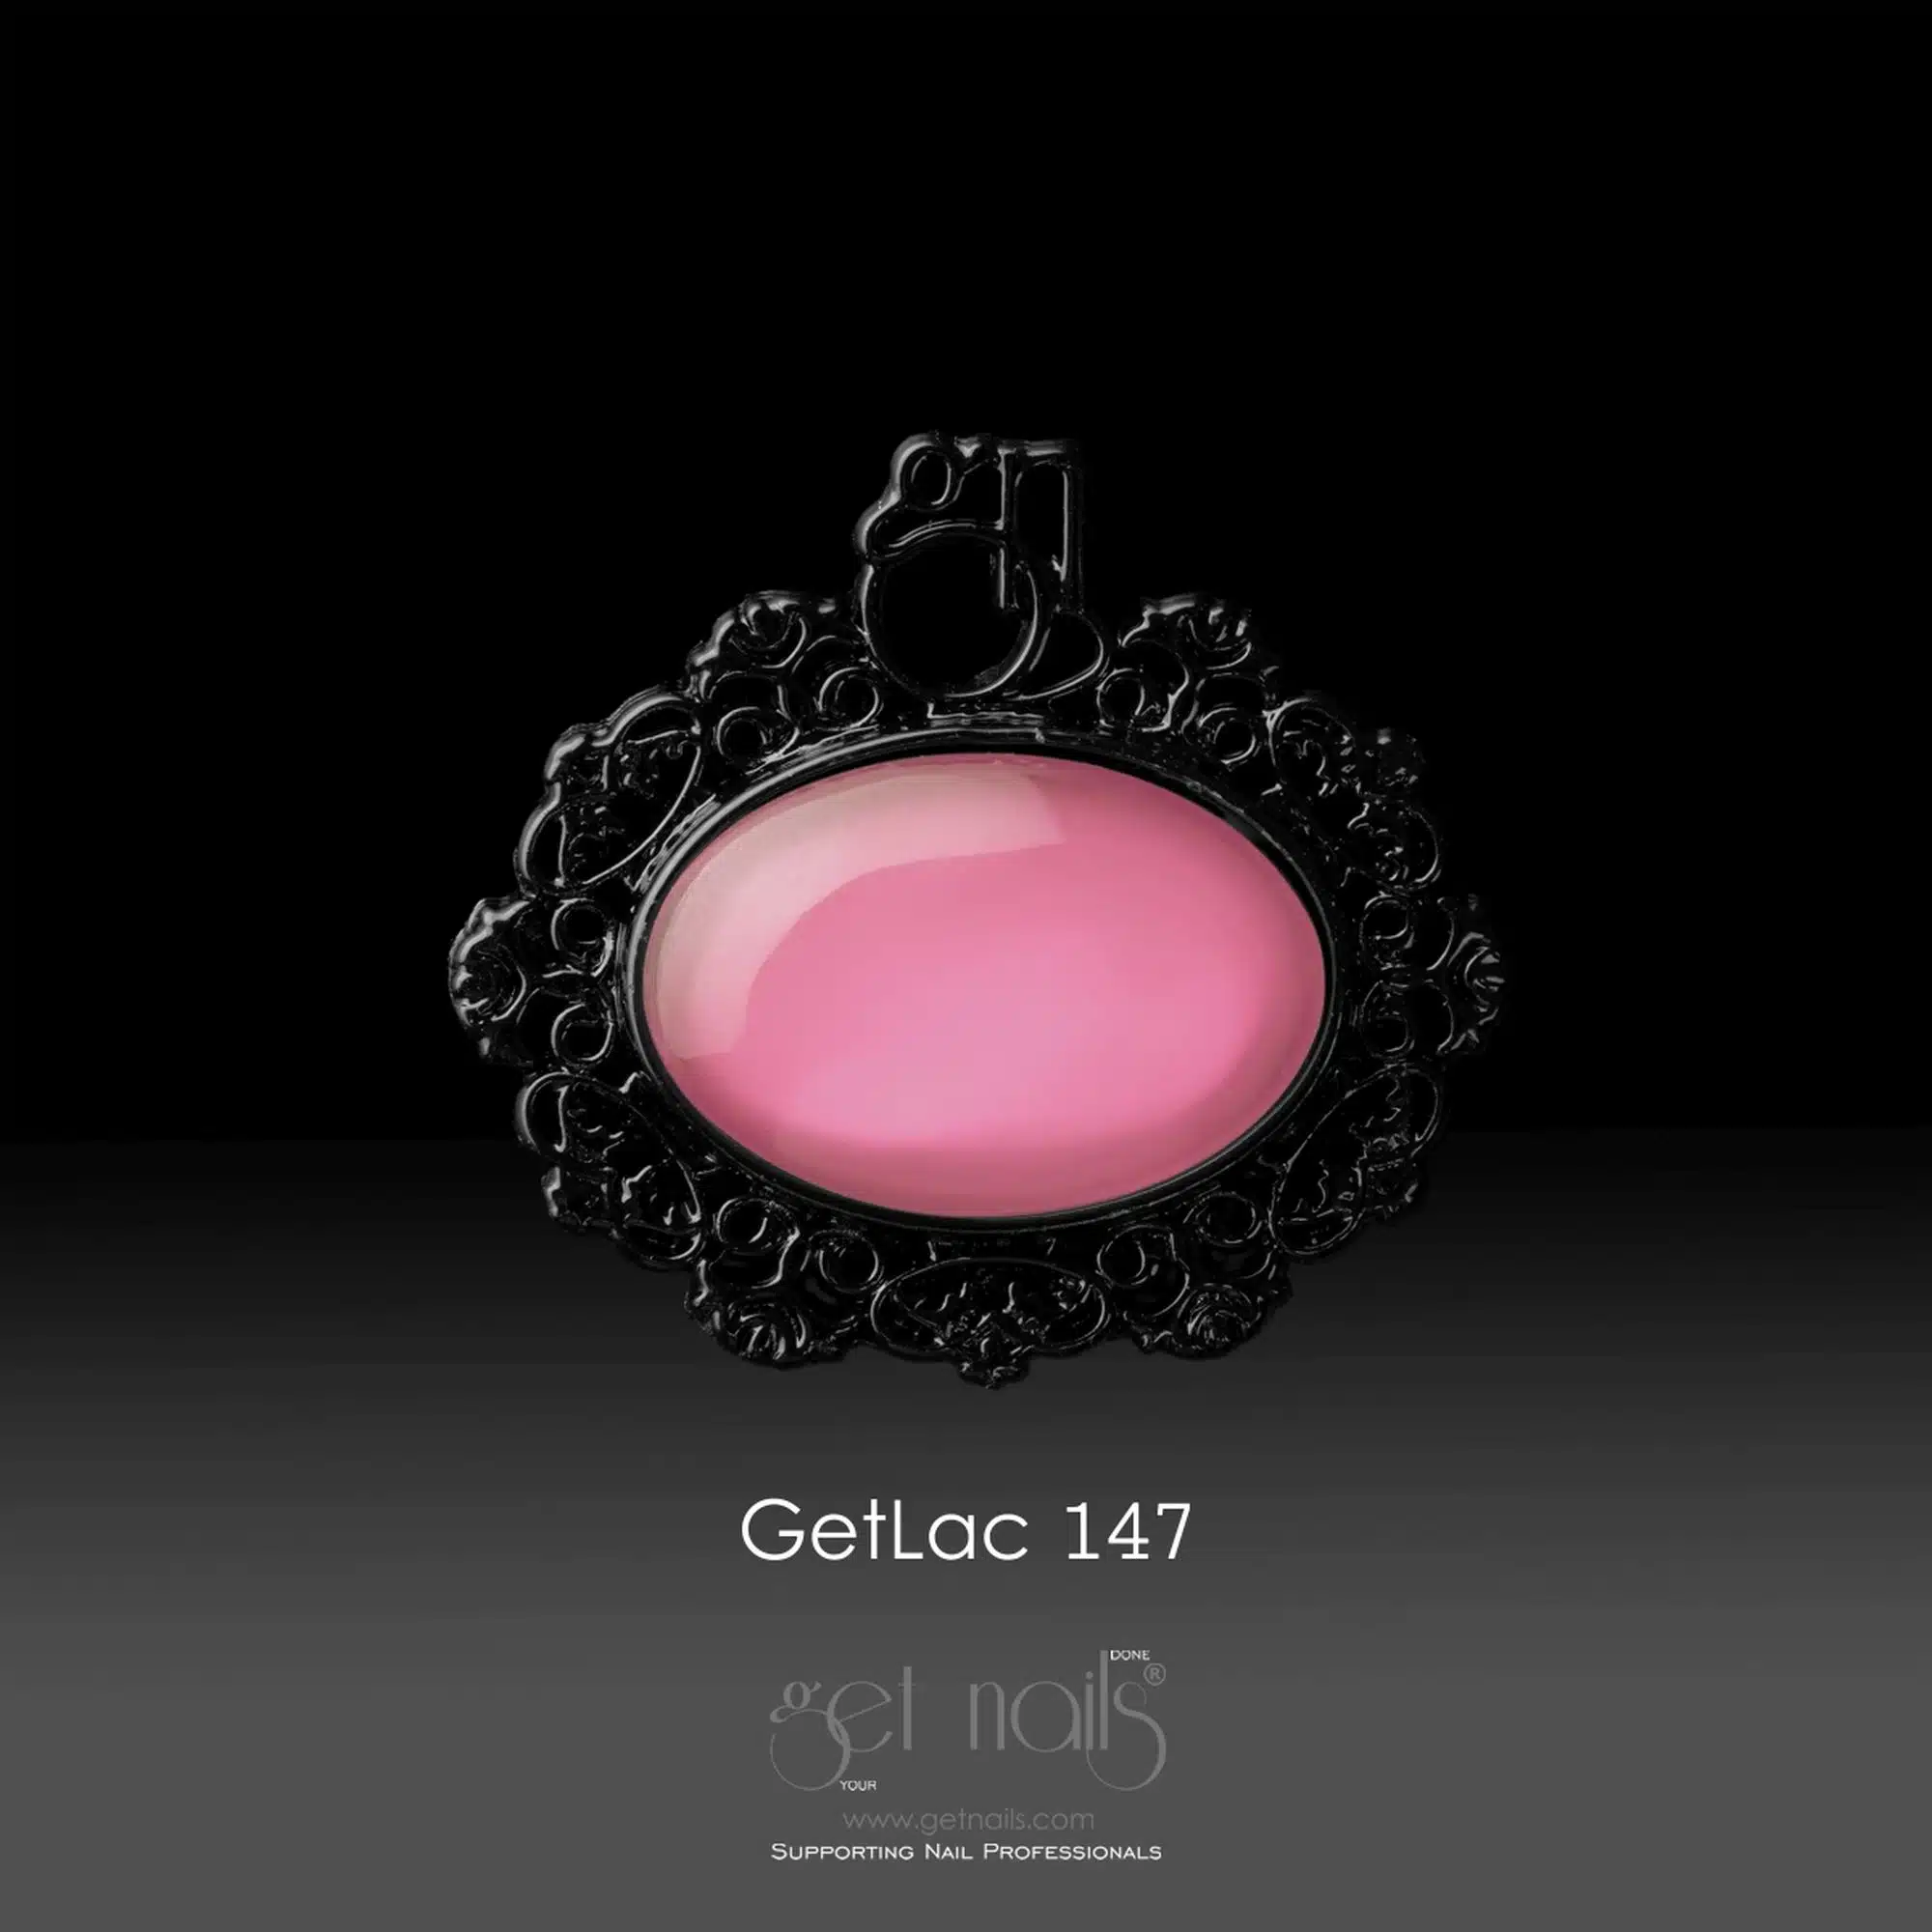 Get Nails Austria - GetLac 147 15 g